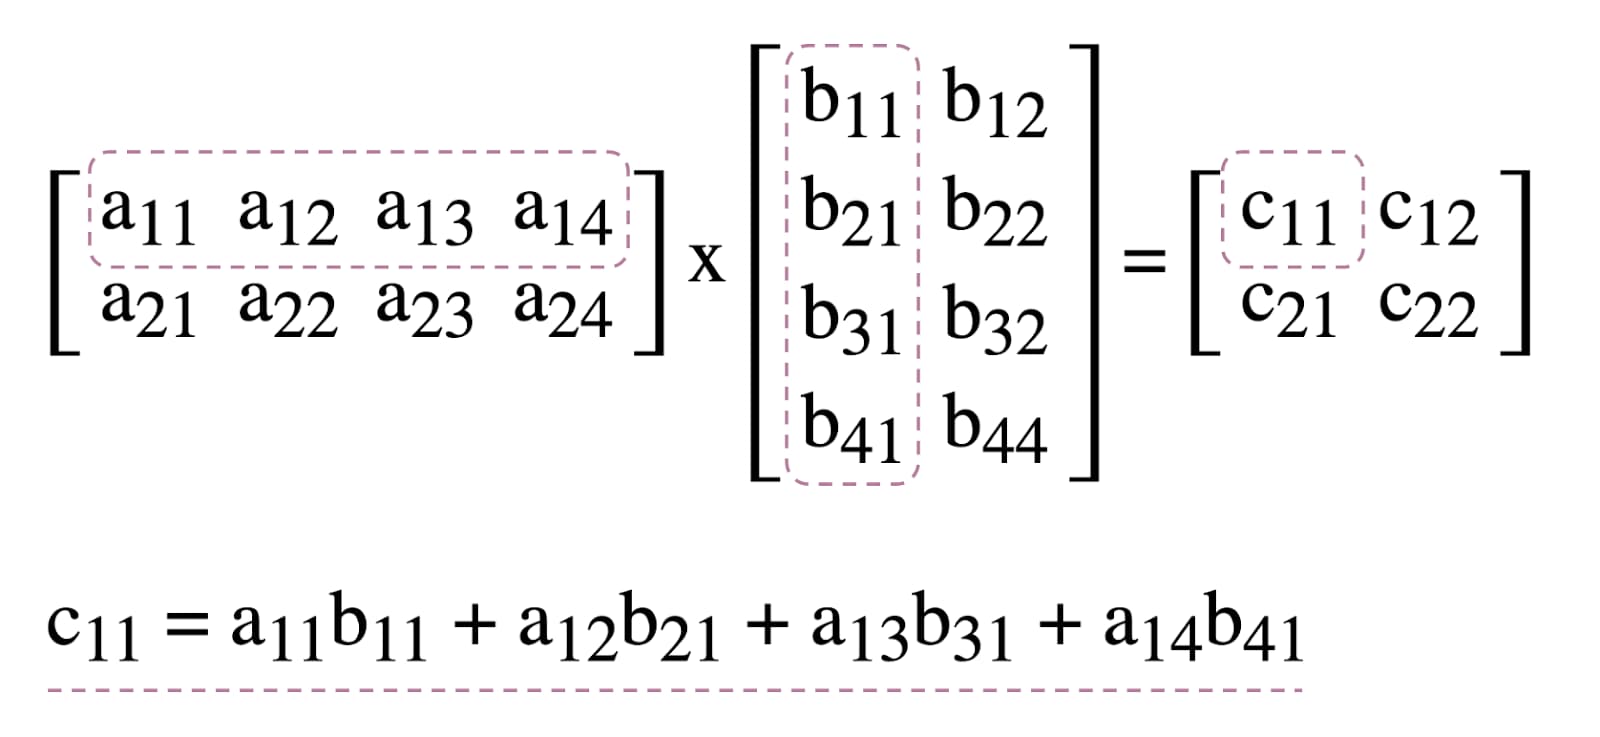 Diagram perkalian matriks